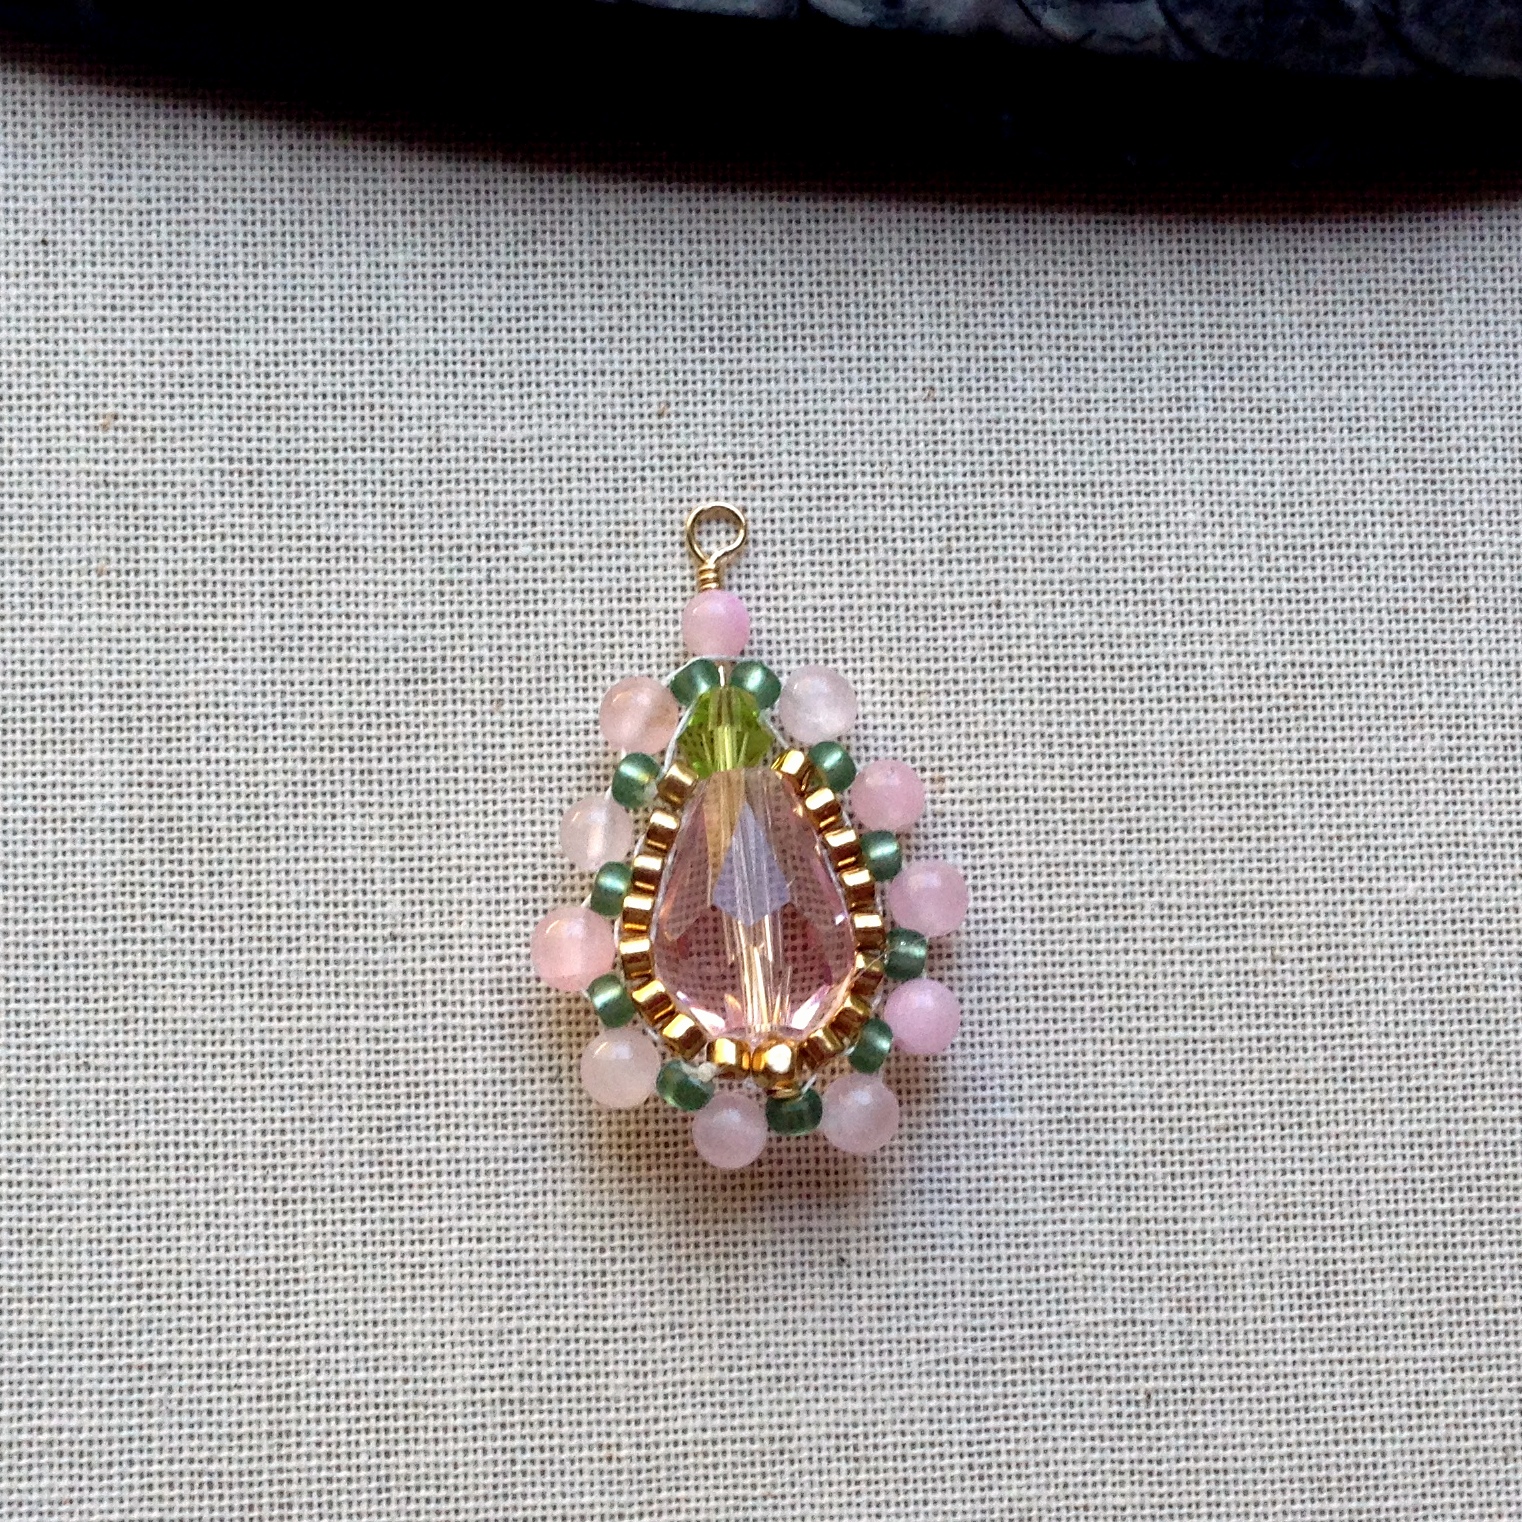 Brick Stitch earrings with Gemstones: Lisa Yang's Jewelry Blog